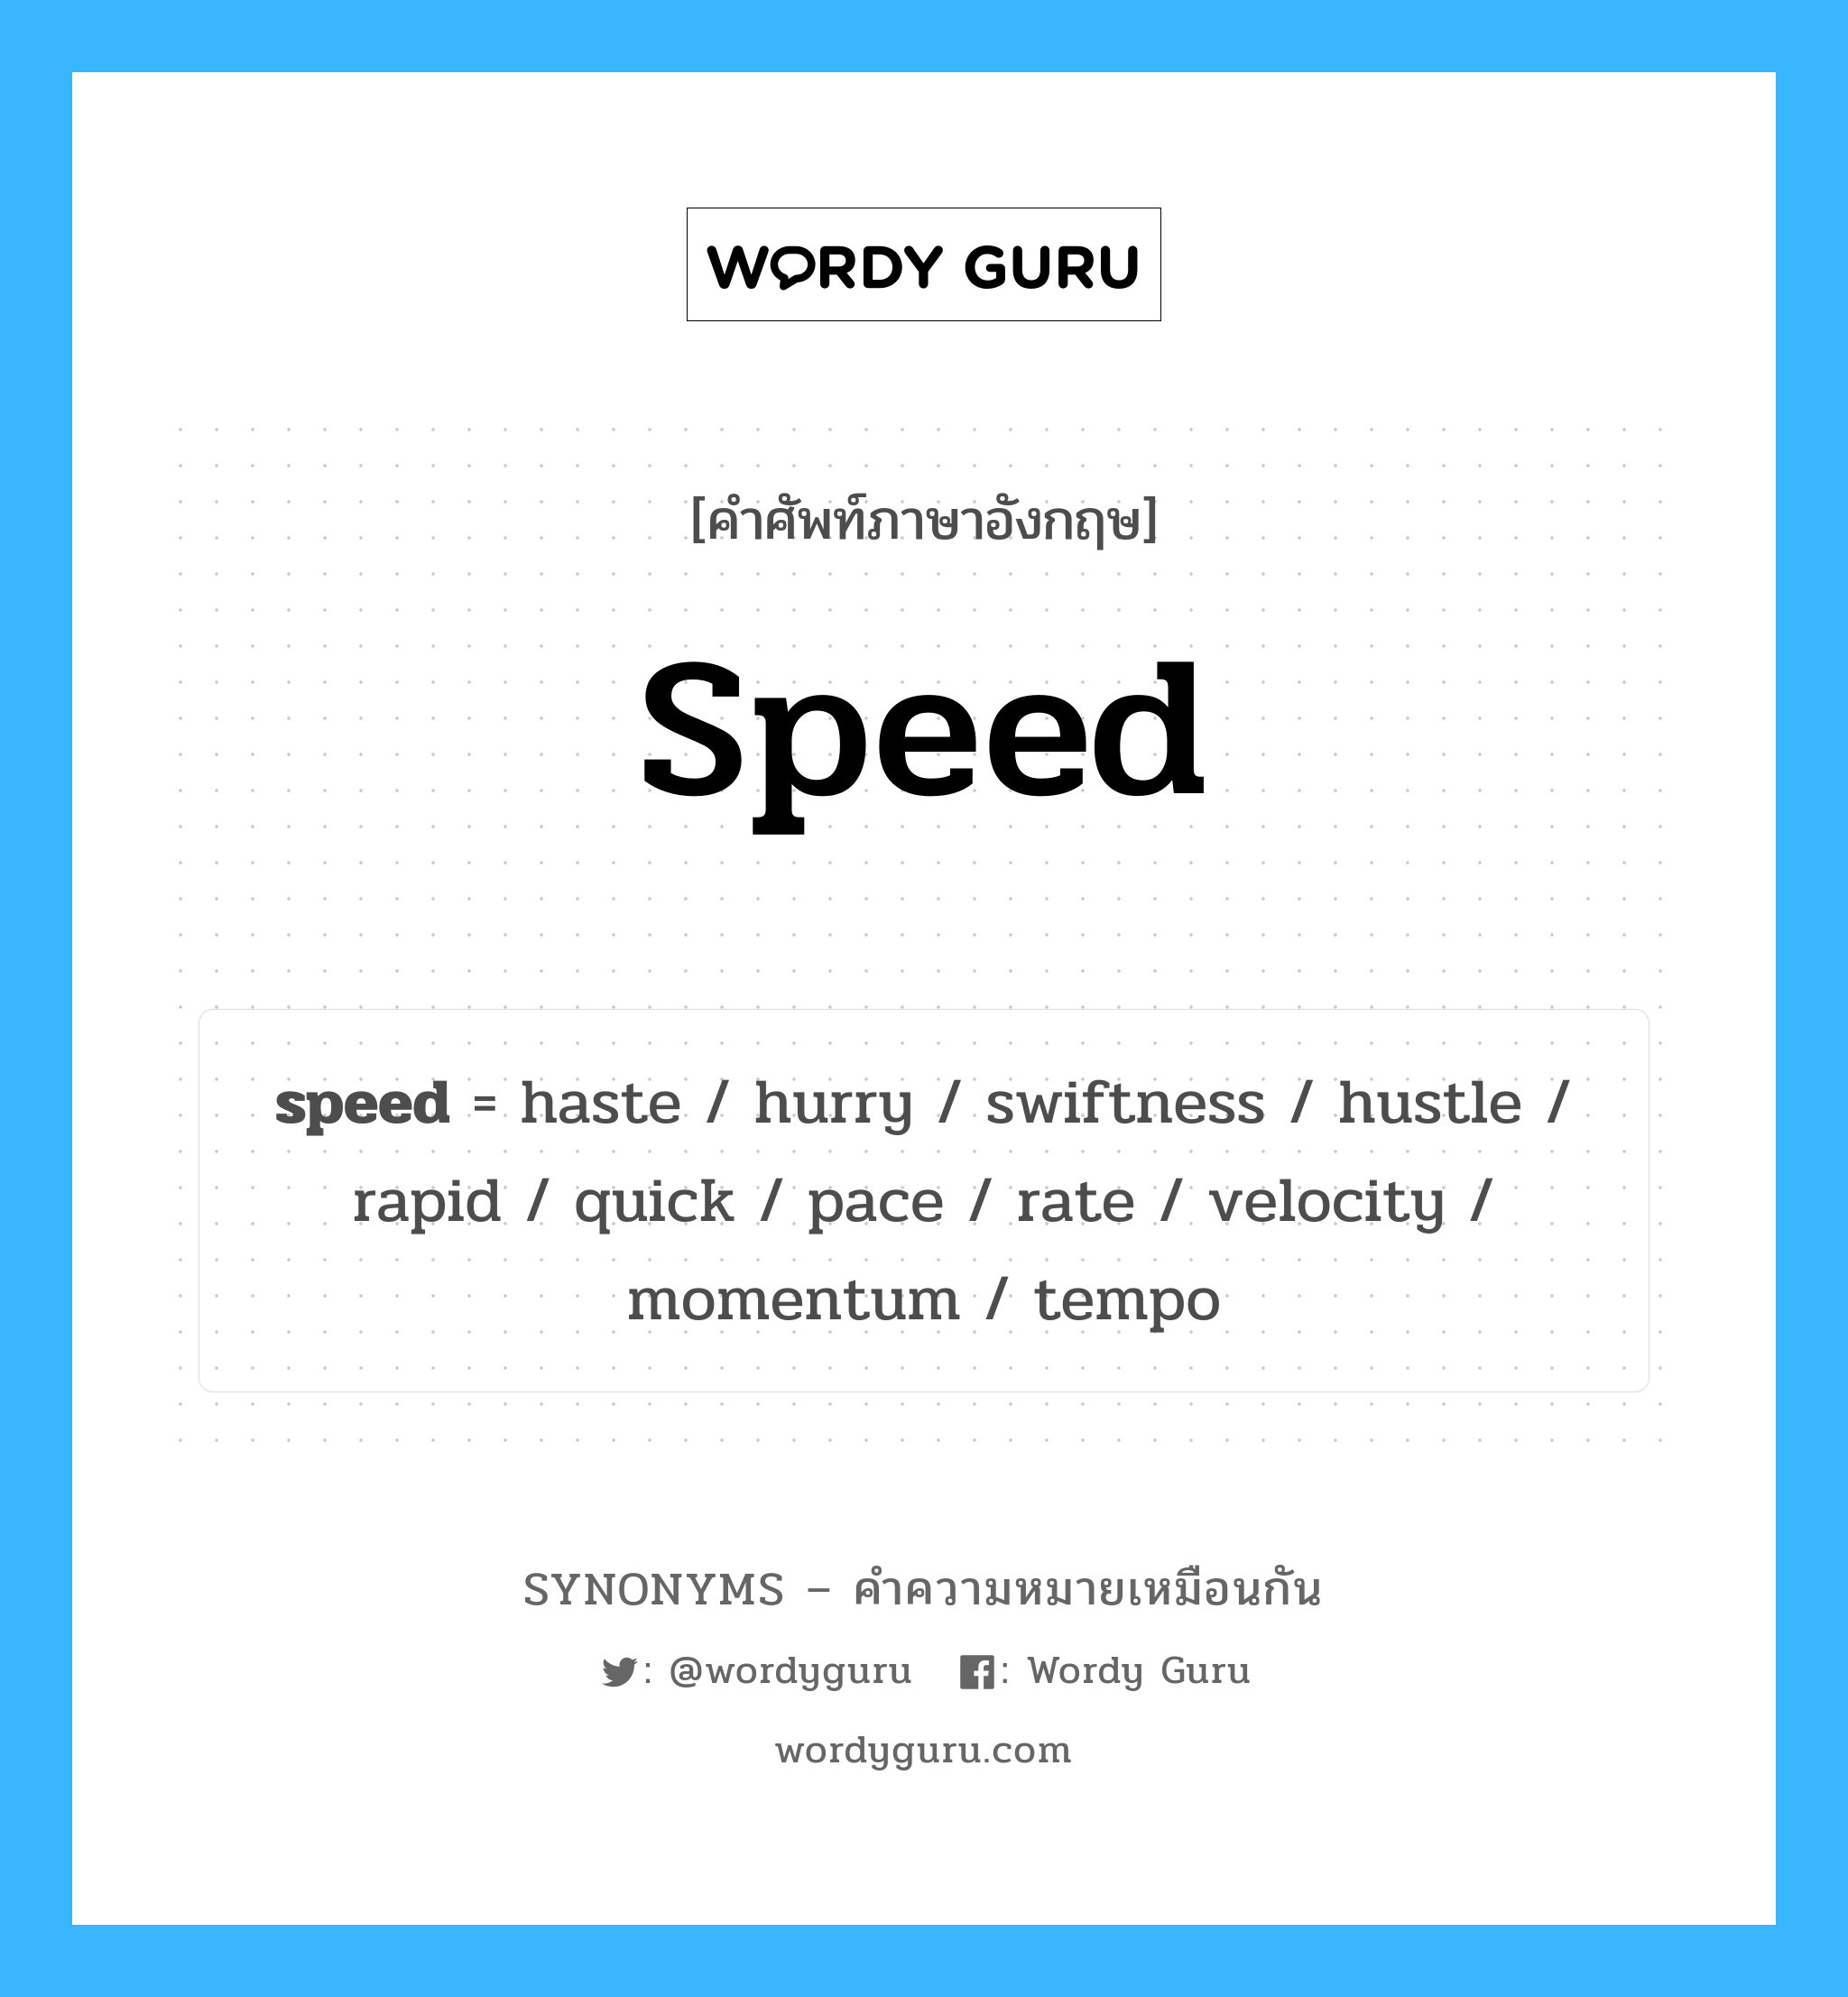 hurry เป็นหนึ่งใน speed และมีคำอื่น ๆ อีกดังนี้, คำศัพท์ภาษาอังกฤษ hurry ความหมายคล้ายกันกับ speed แปลว่า รีบ หมวด speed